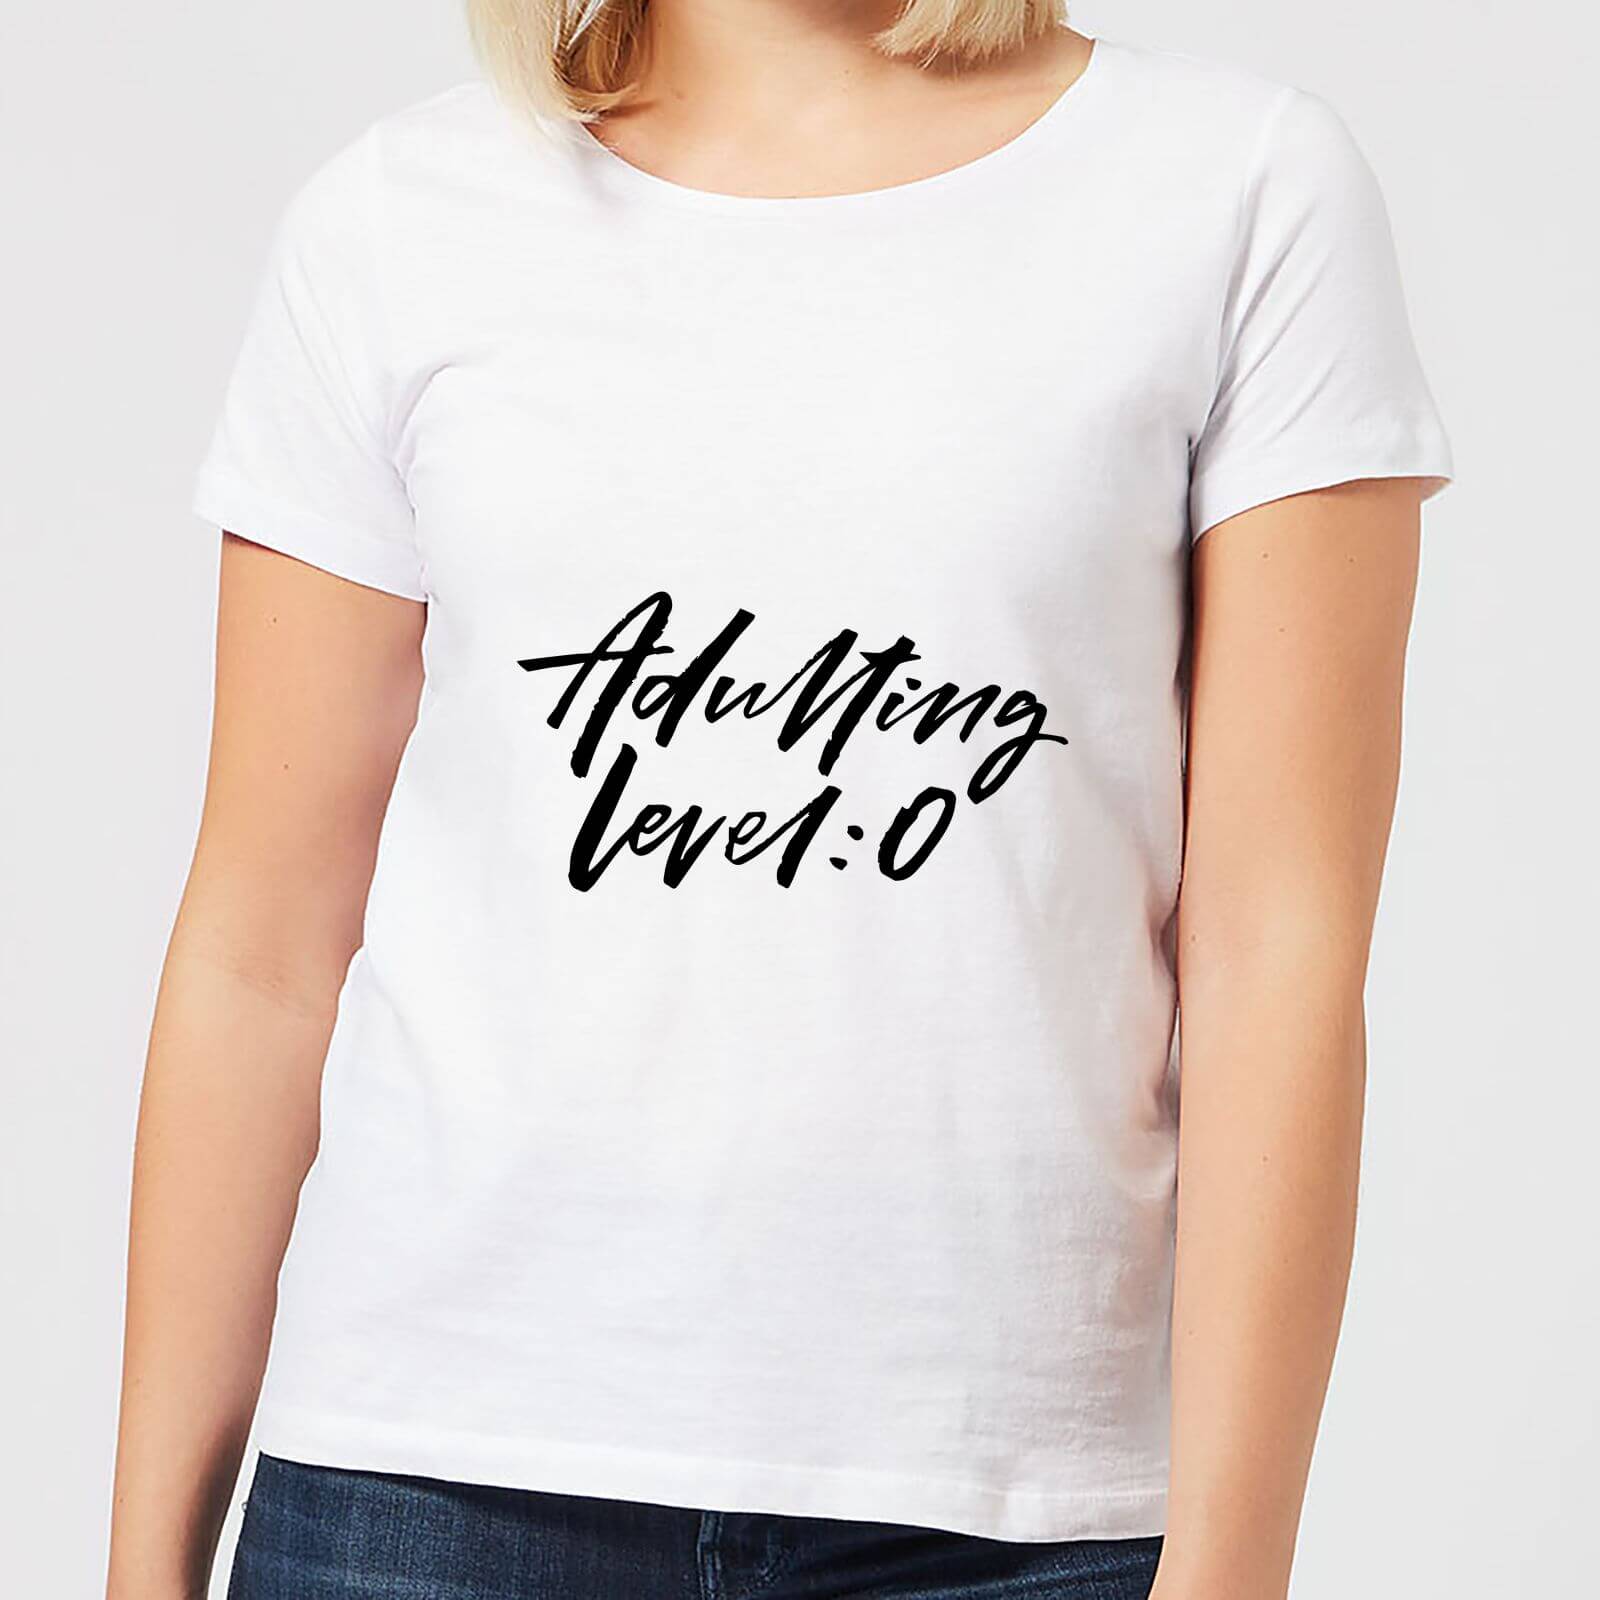 Adulting Level 0 Women's T-Shirt - White - S - White